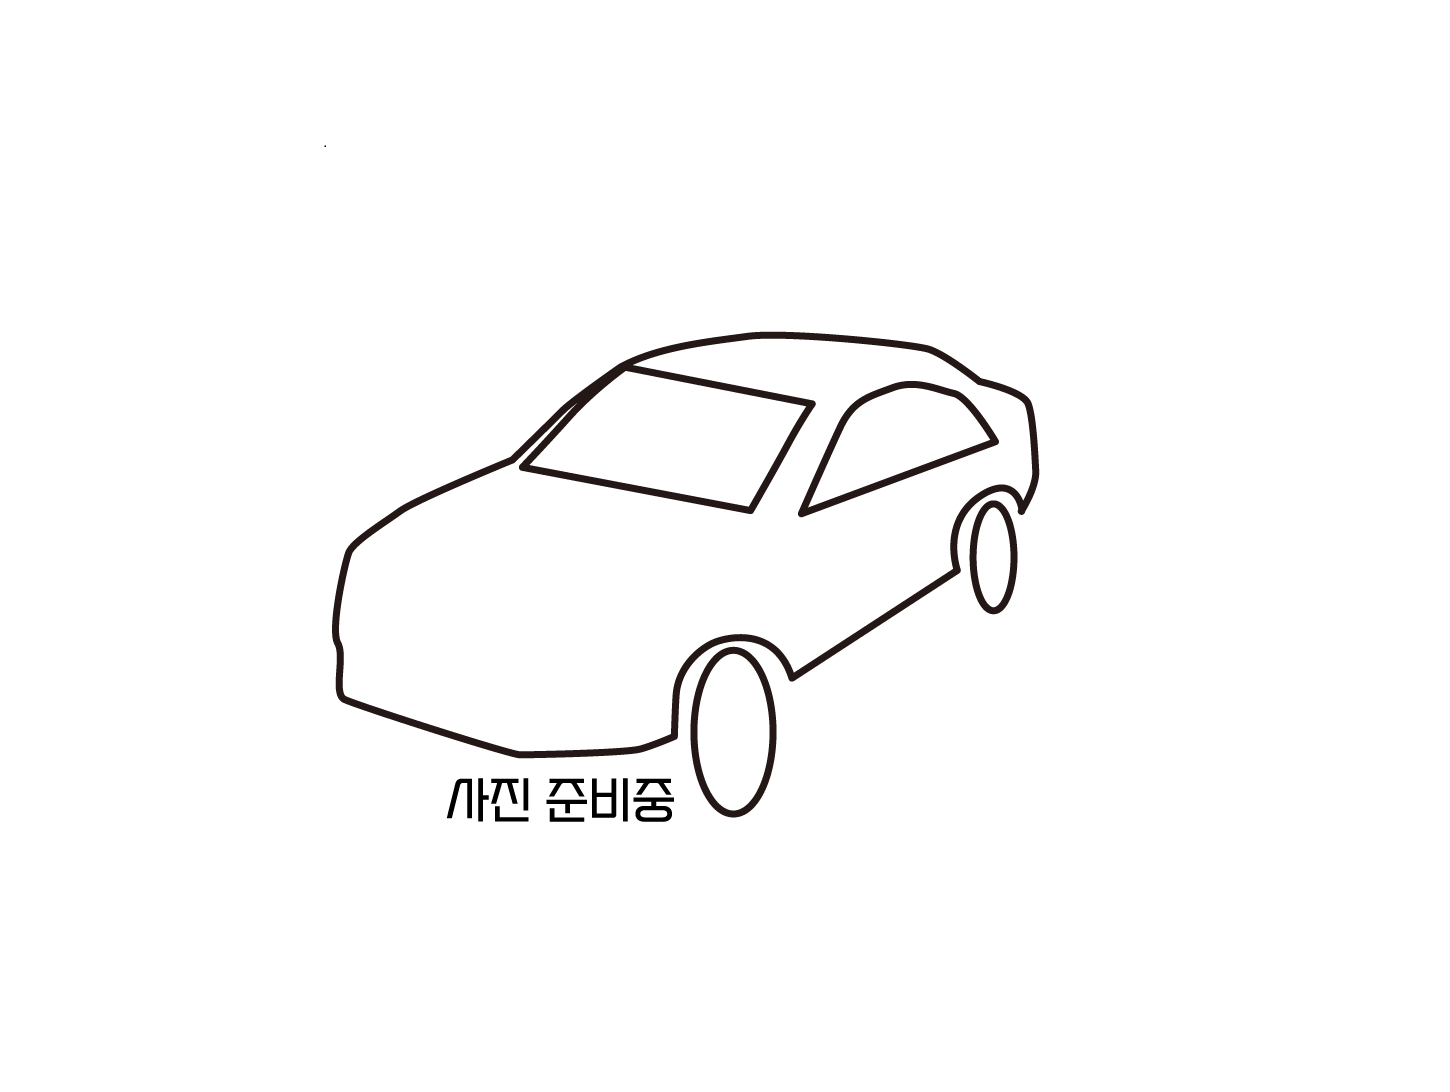 car image